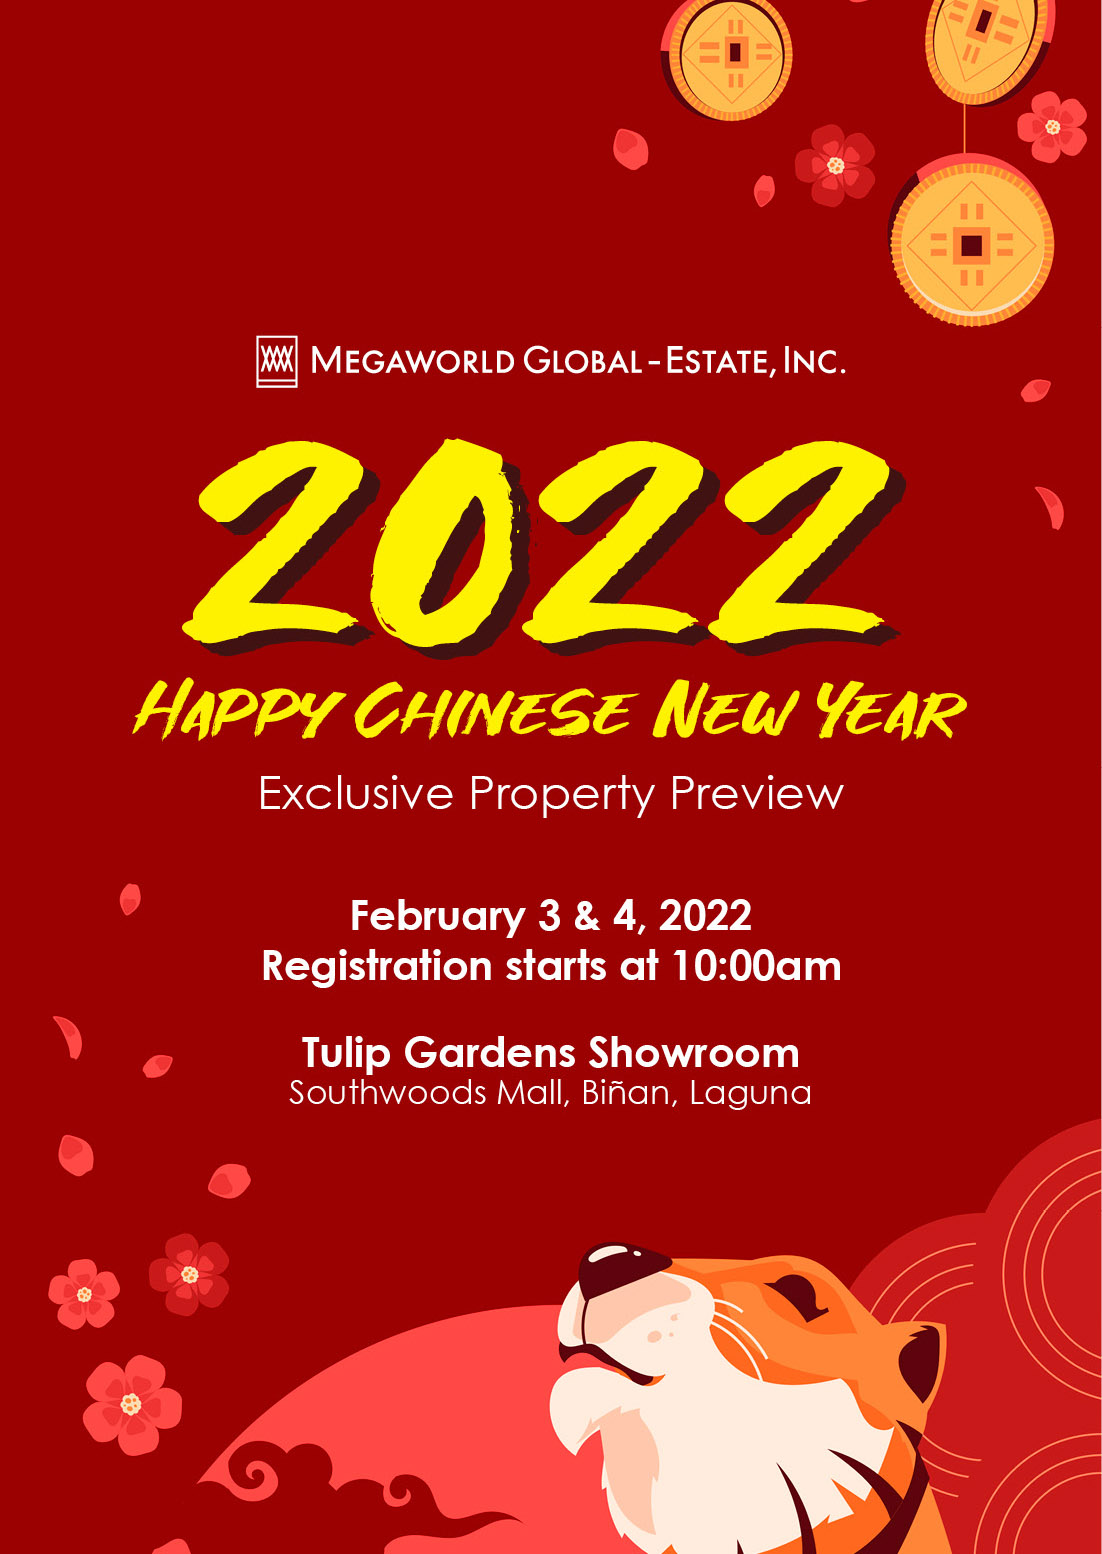 mgei viproperty showcase Chinese new year